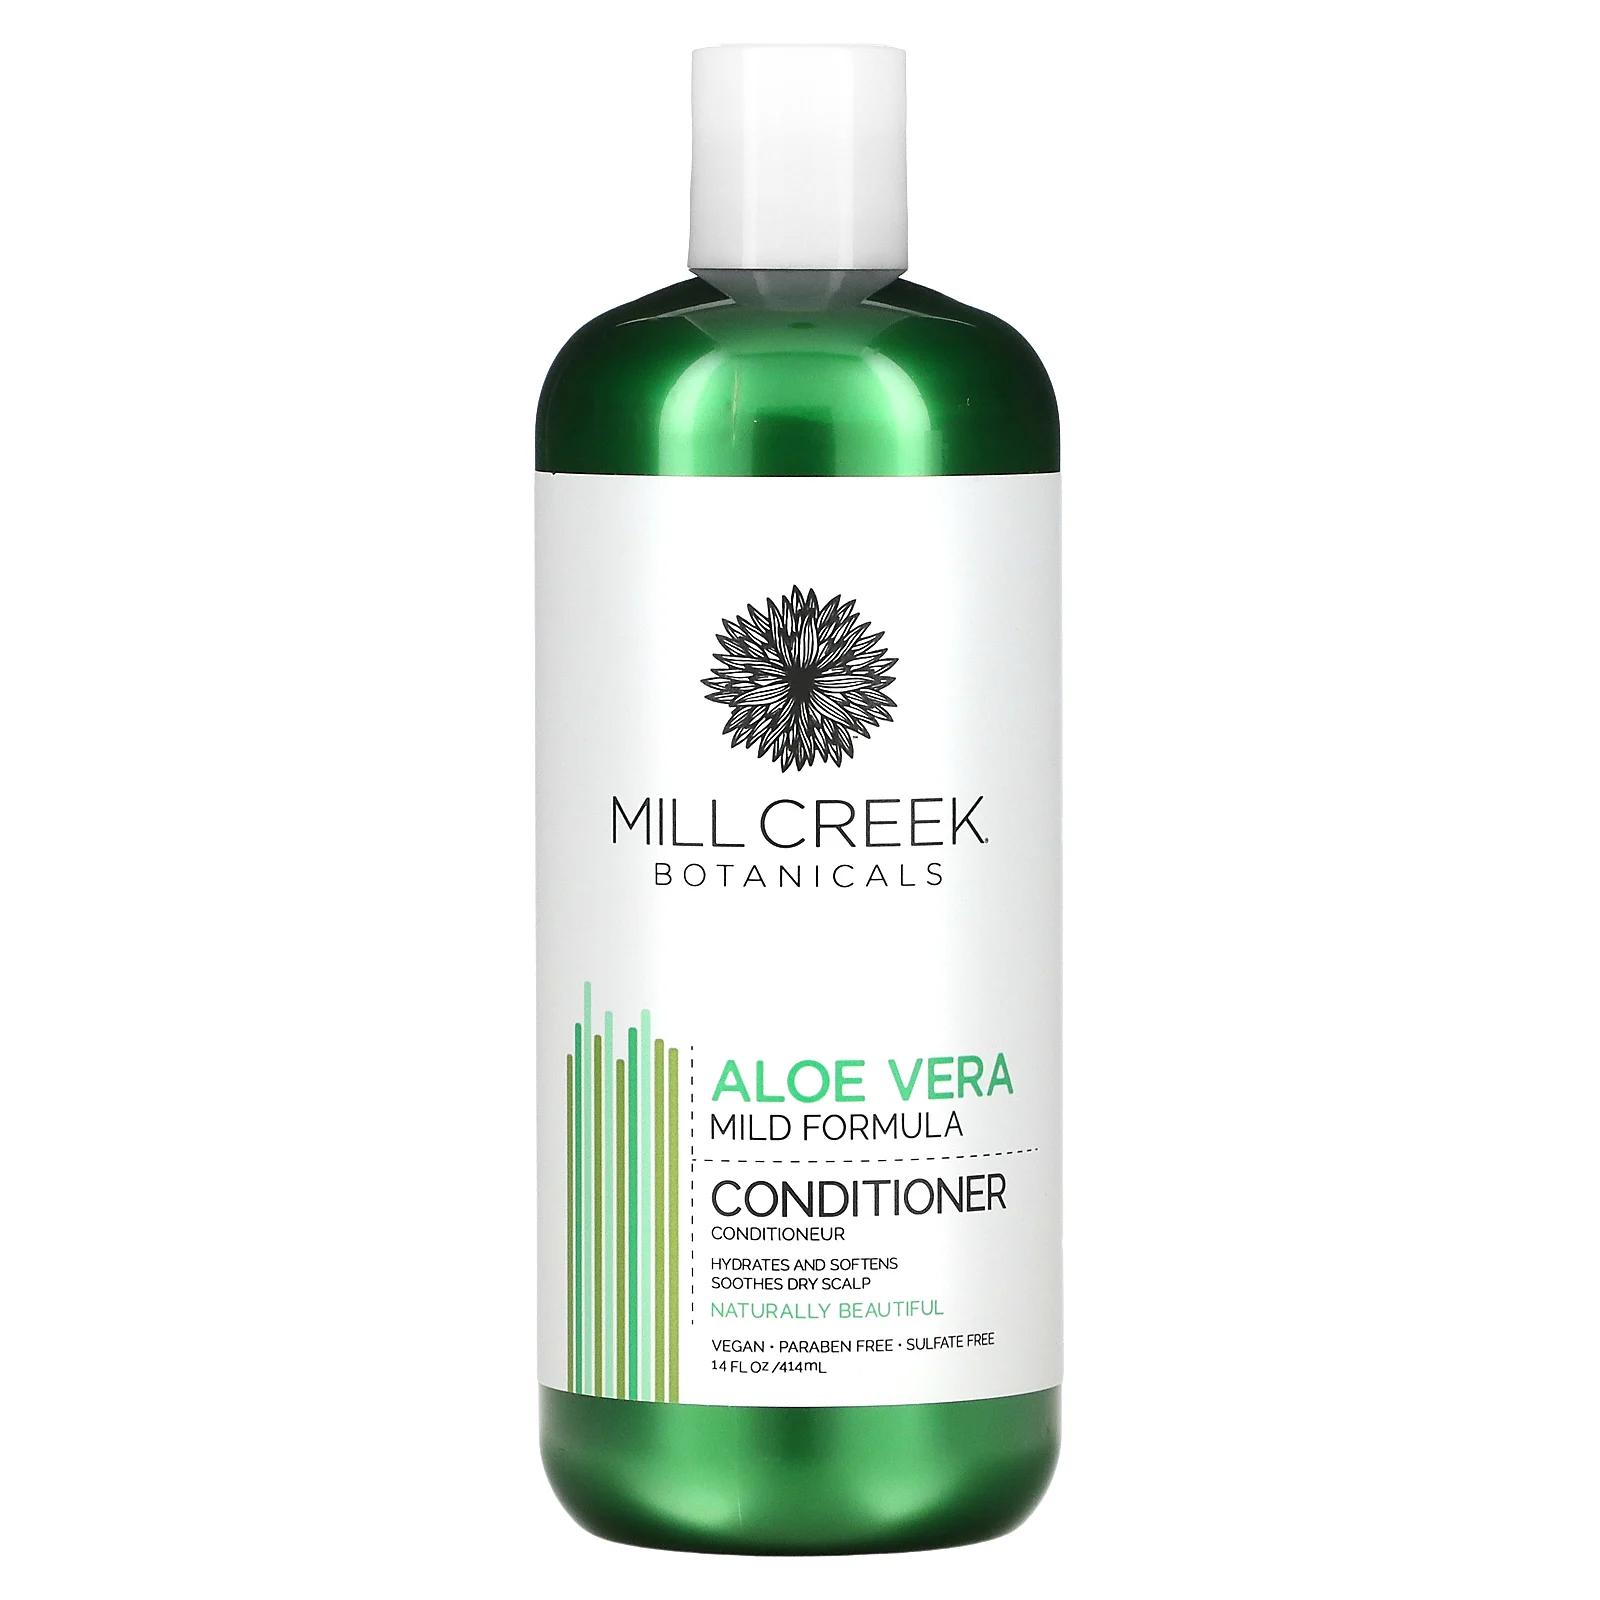 Mill Creek Botanicals Aloe Vera Conditioner Mild Formula 14 fl oz (414 ml)